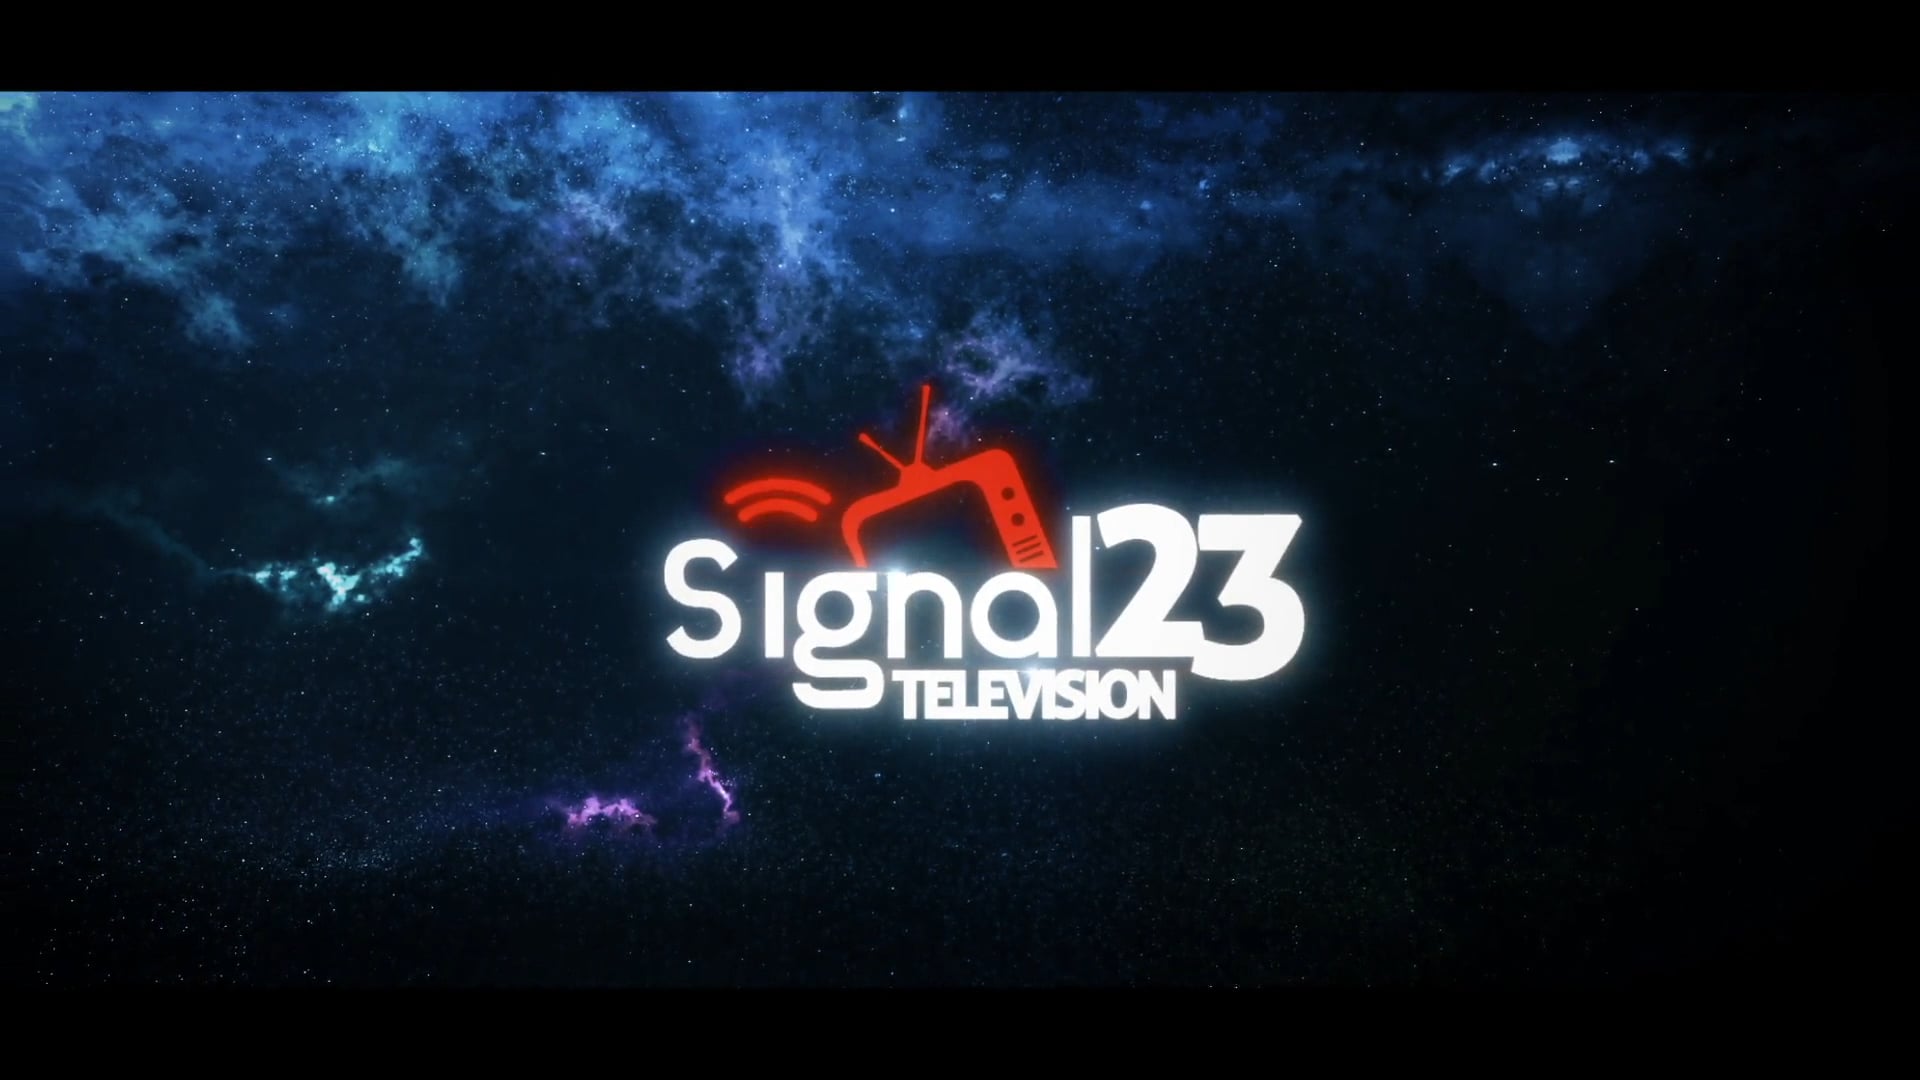 signal23tv app